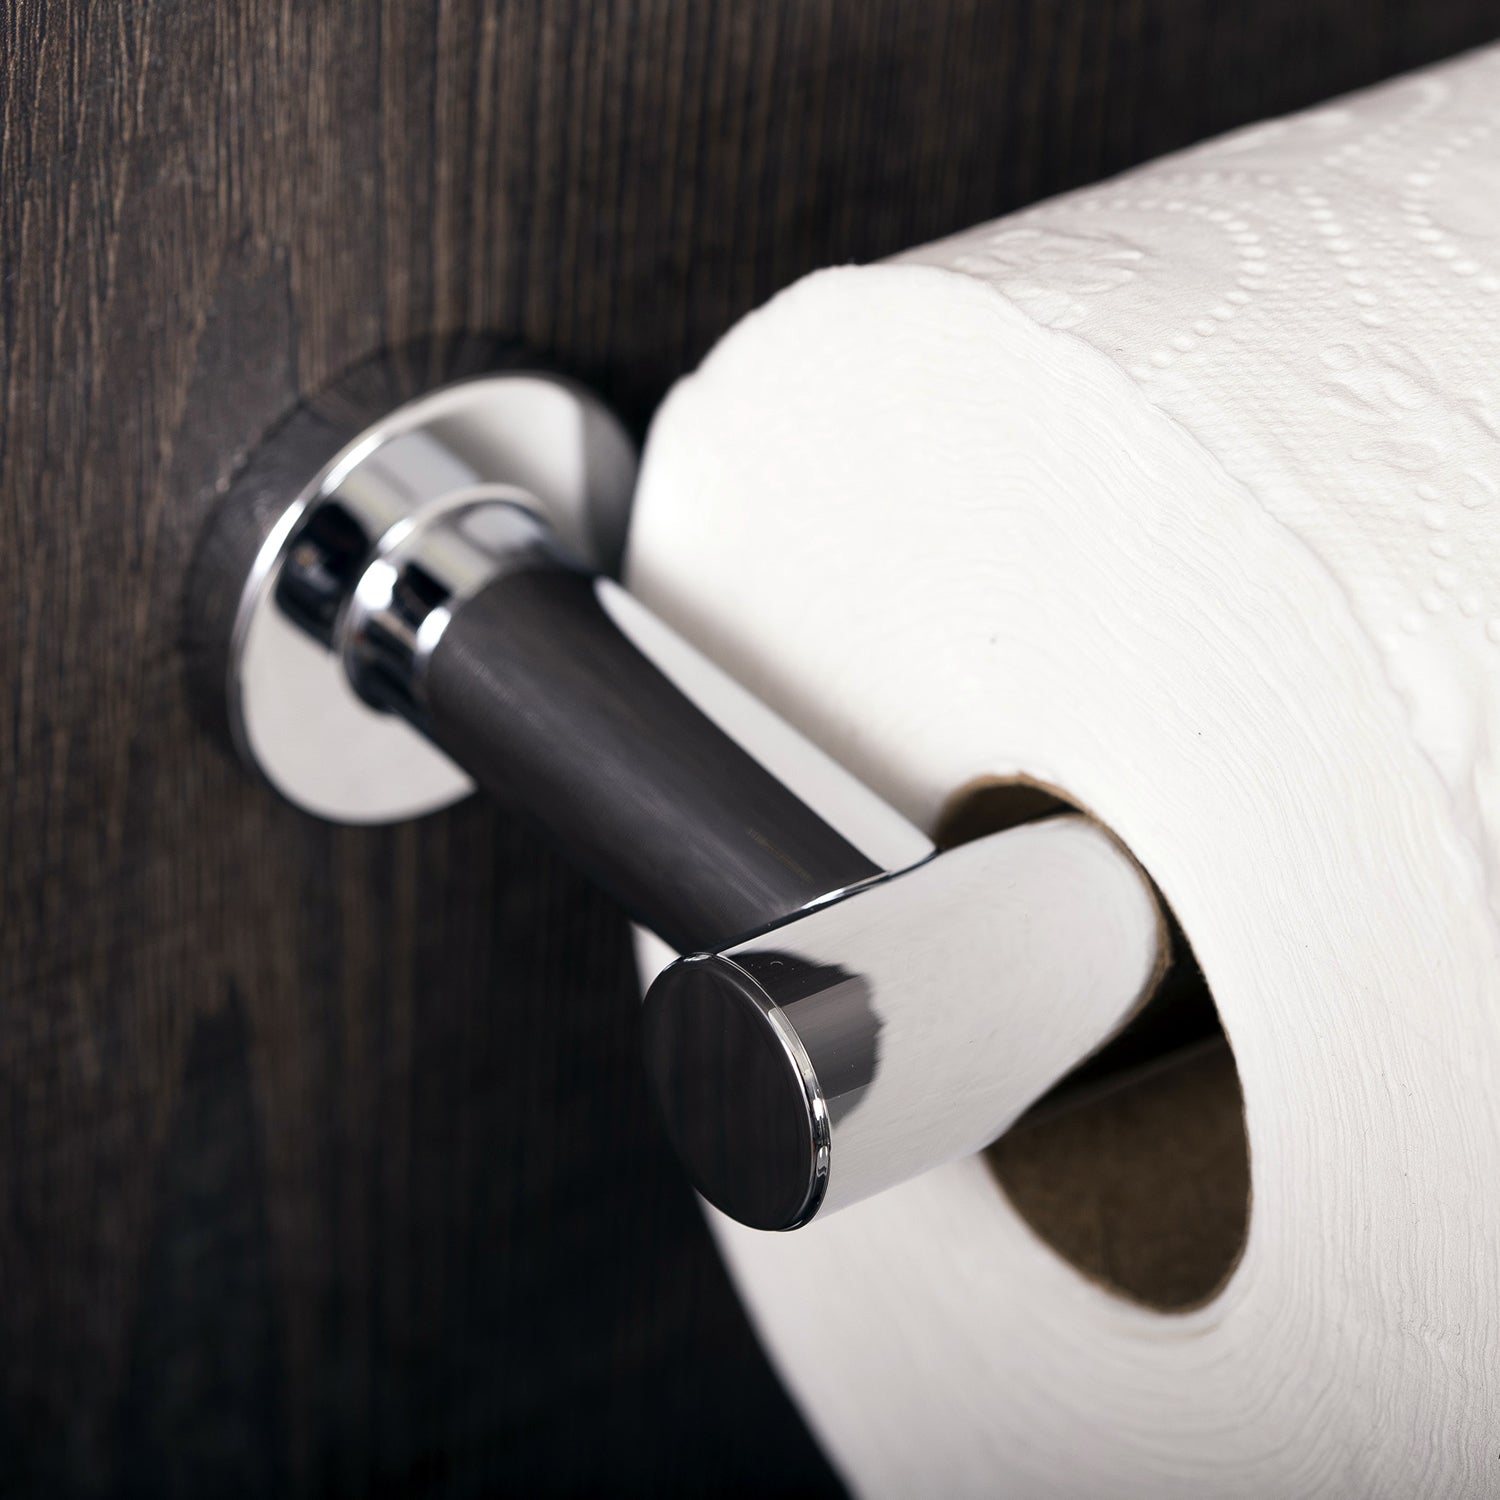 Minimalist Quick Change Toilet Paper Roll Holder by Chriswak